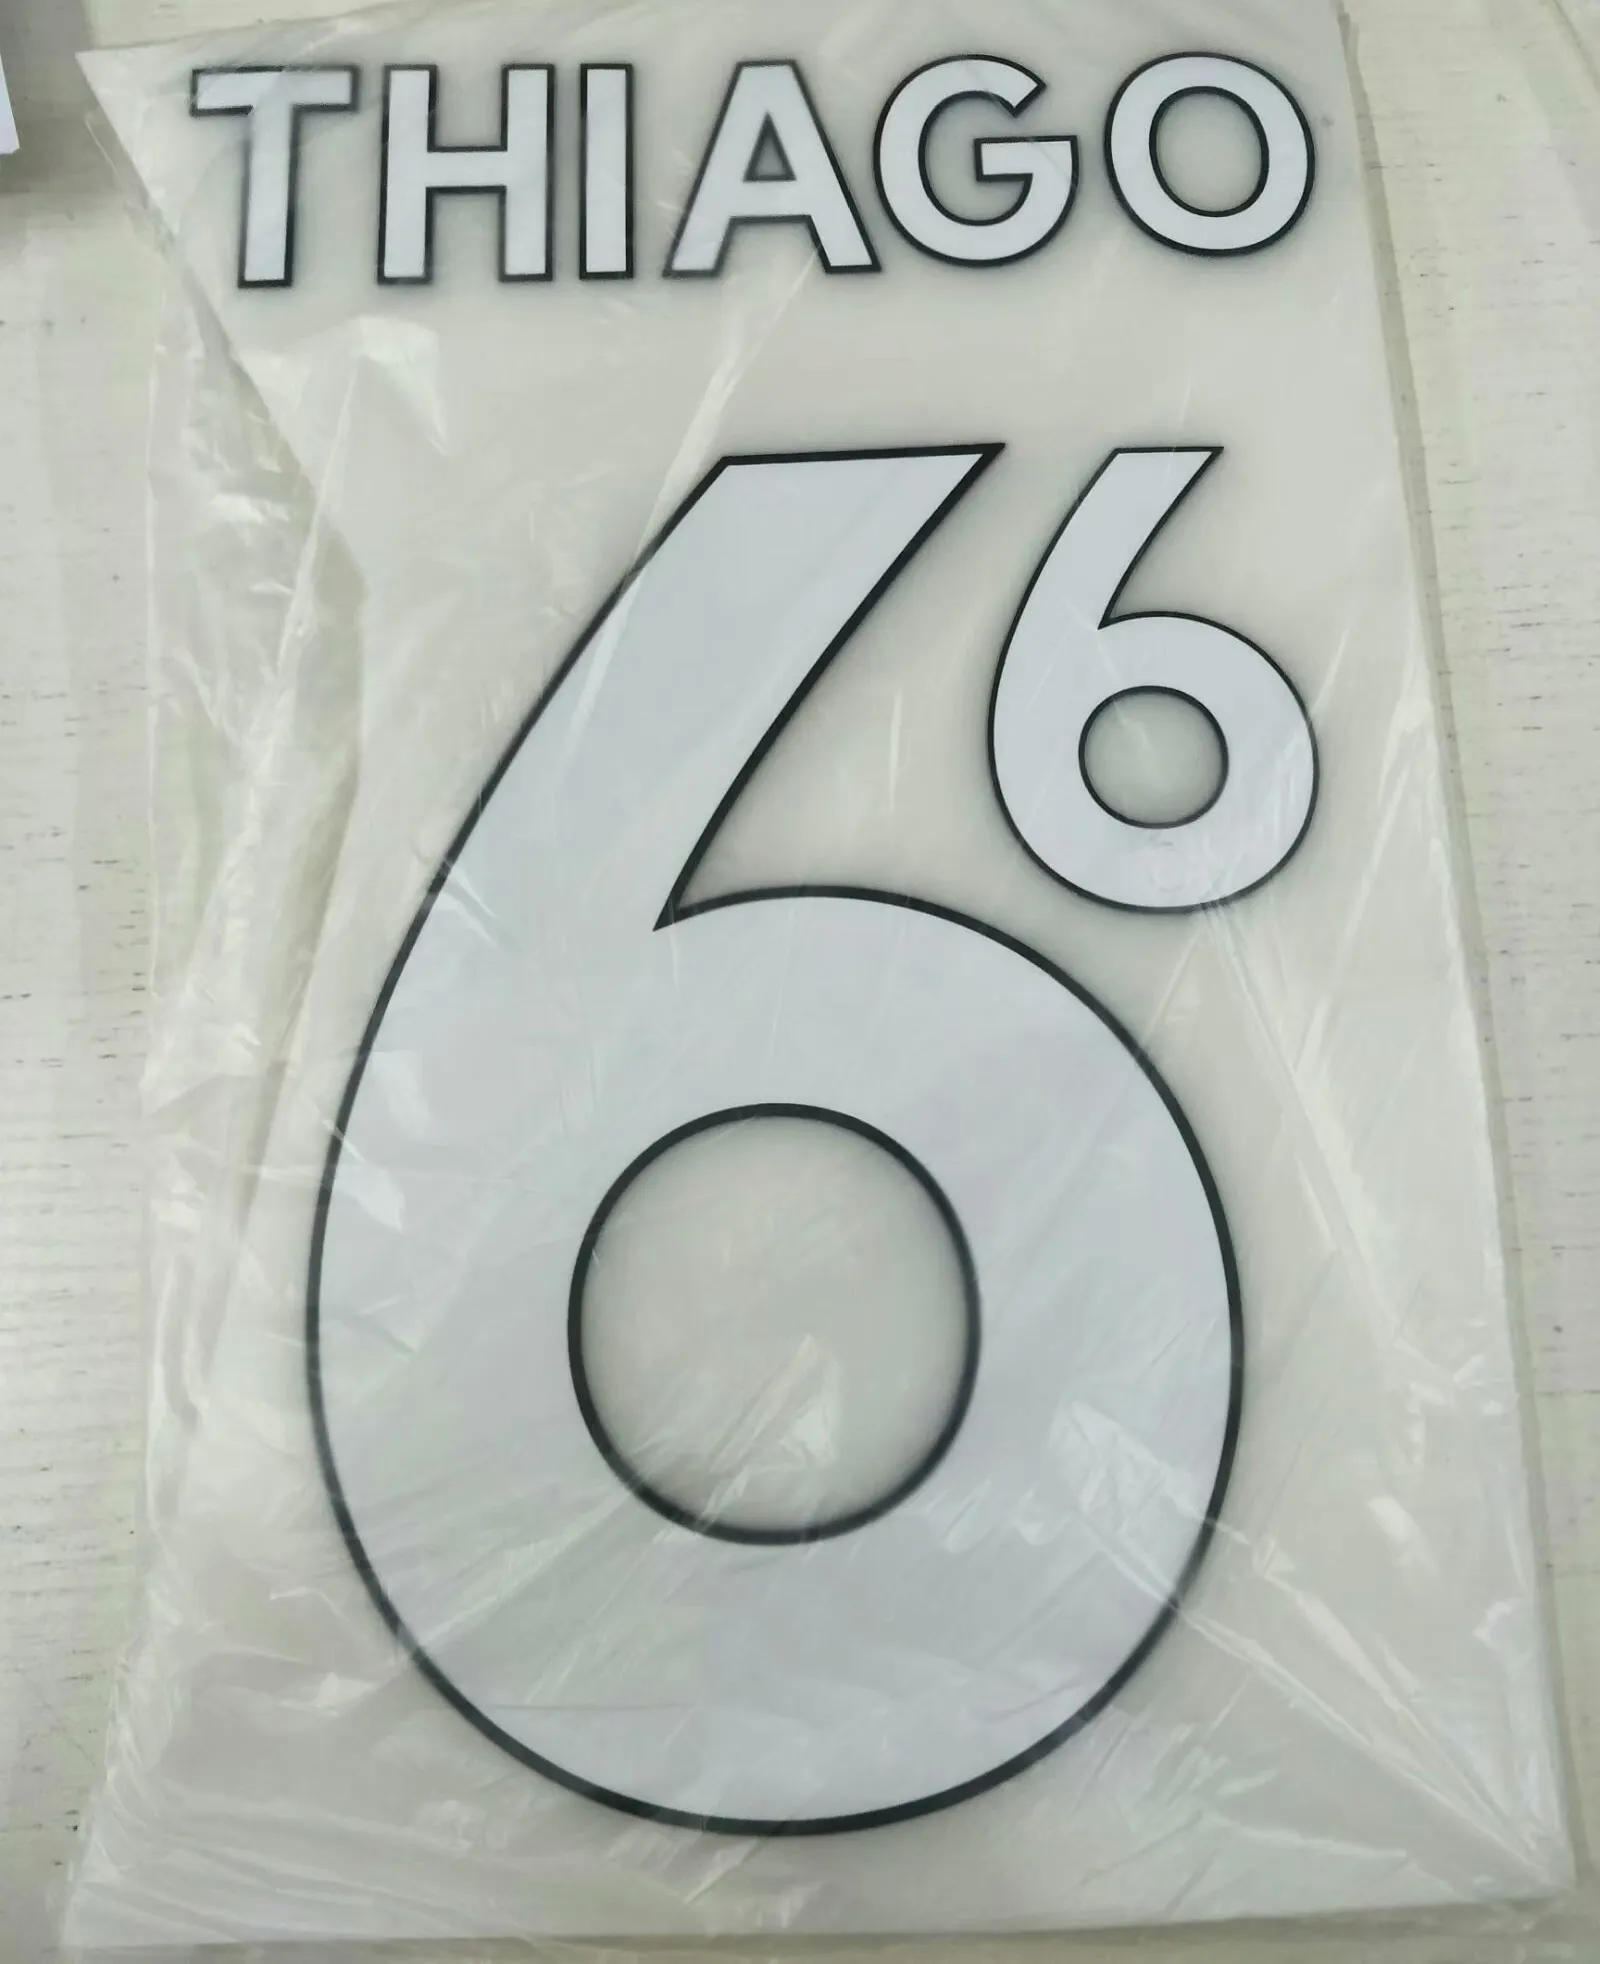 2020/21 Premmmier L witte kleur #19 James naamset voetbal patches, #11 Greenwood, #6 Thiago, #10 Pulisic naamset 2021